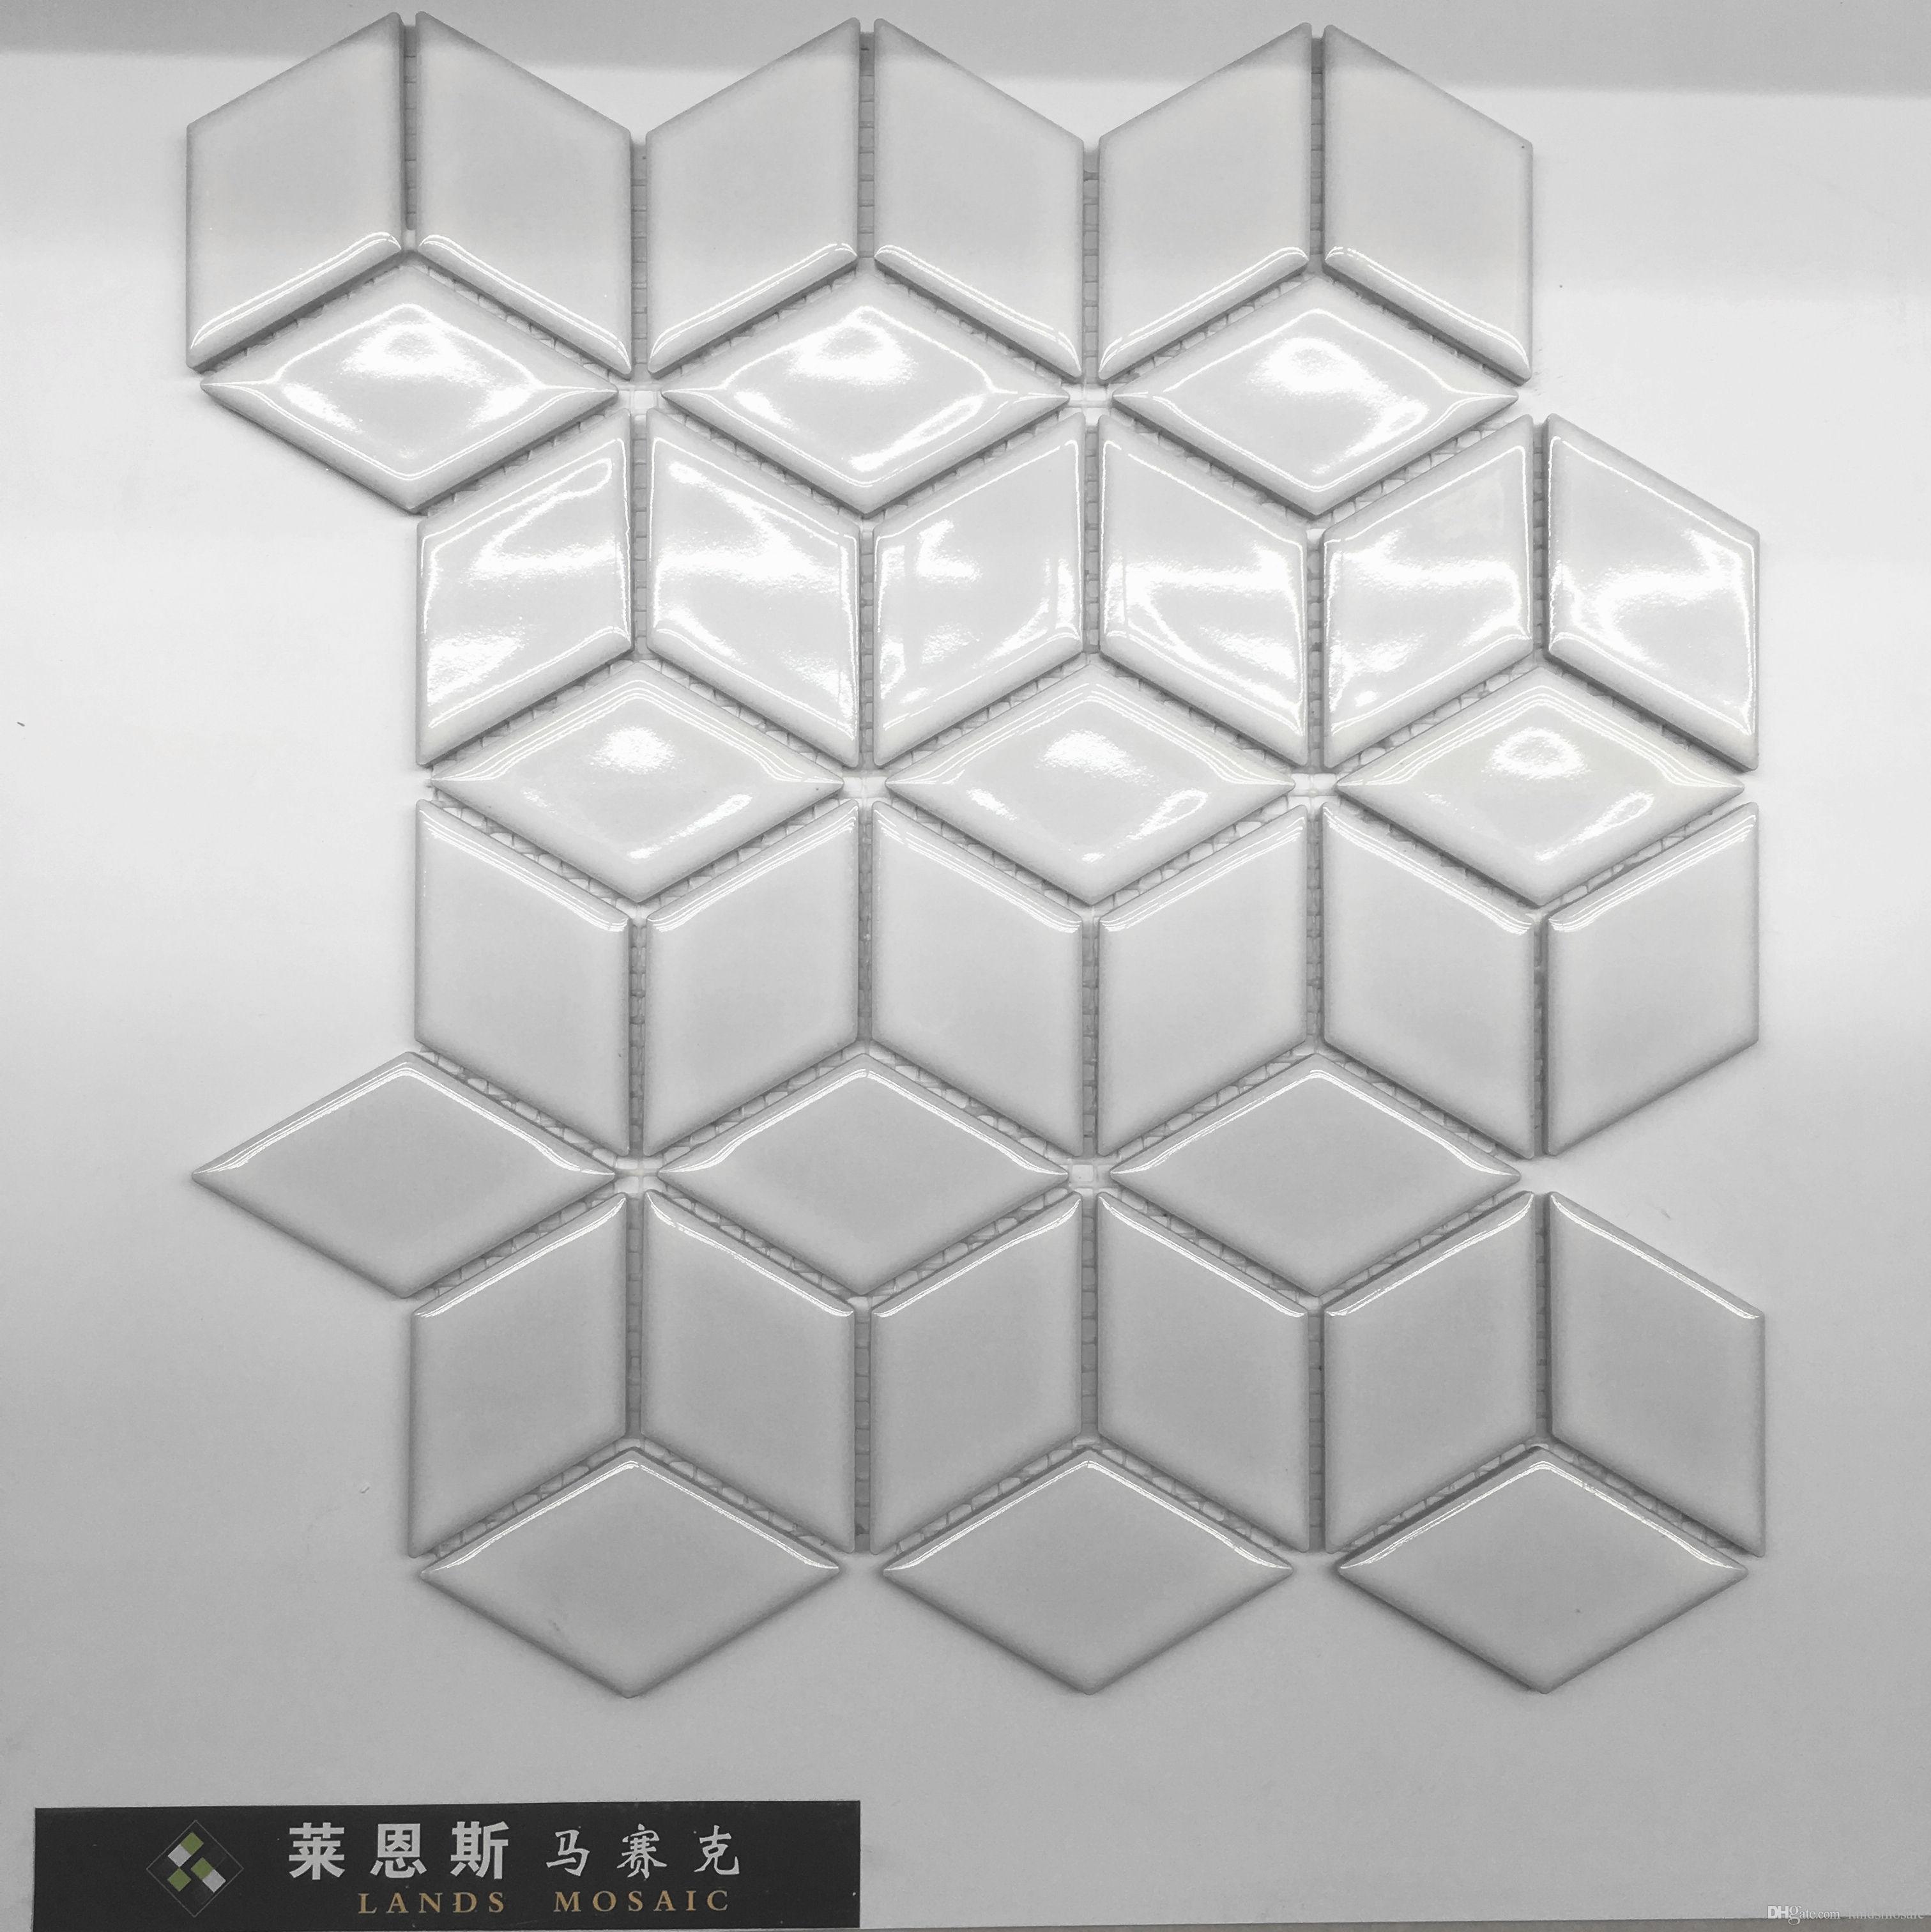 3D White Glossy Porcelain Mosaic Tiles,Diamond Wall Ceramic Tiles ...